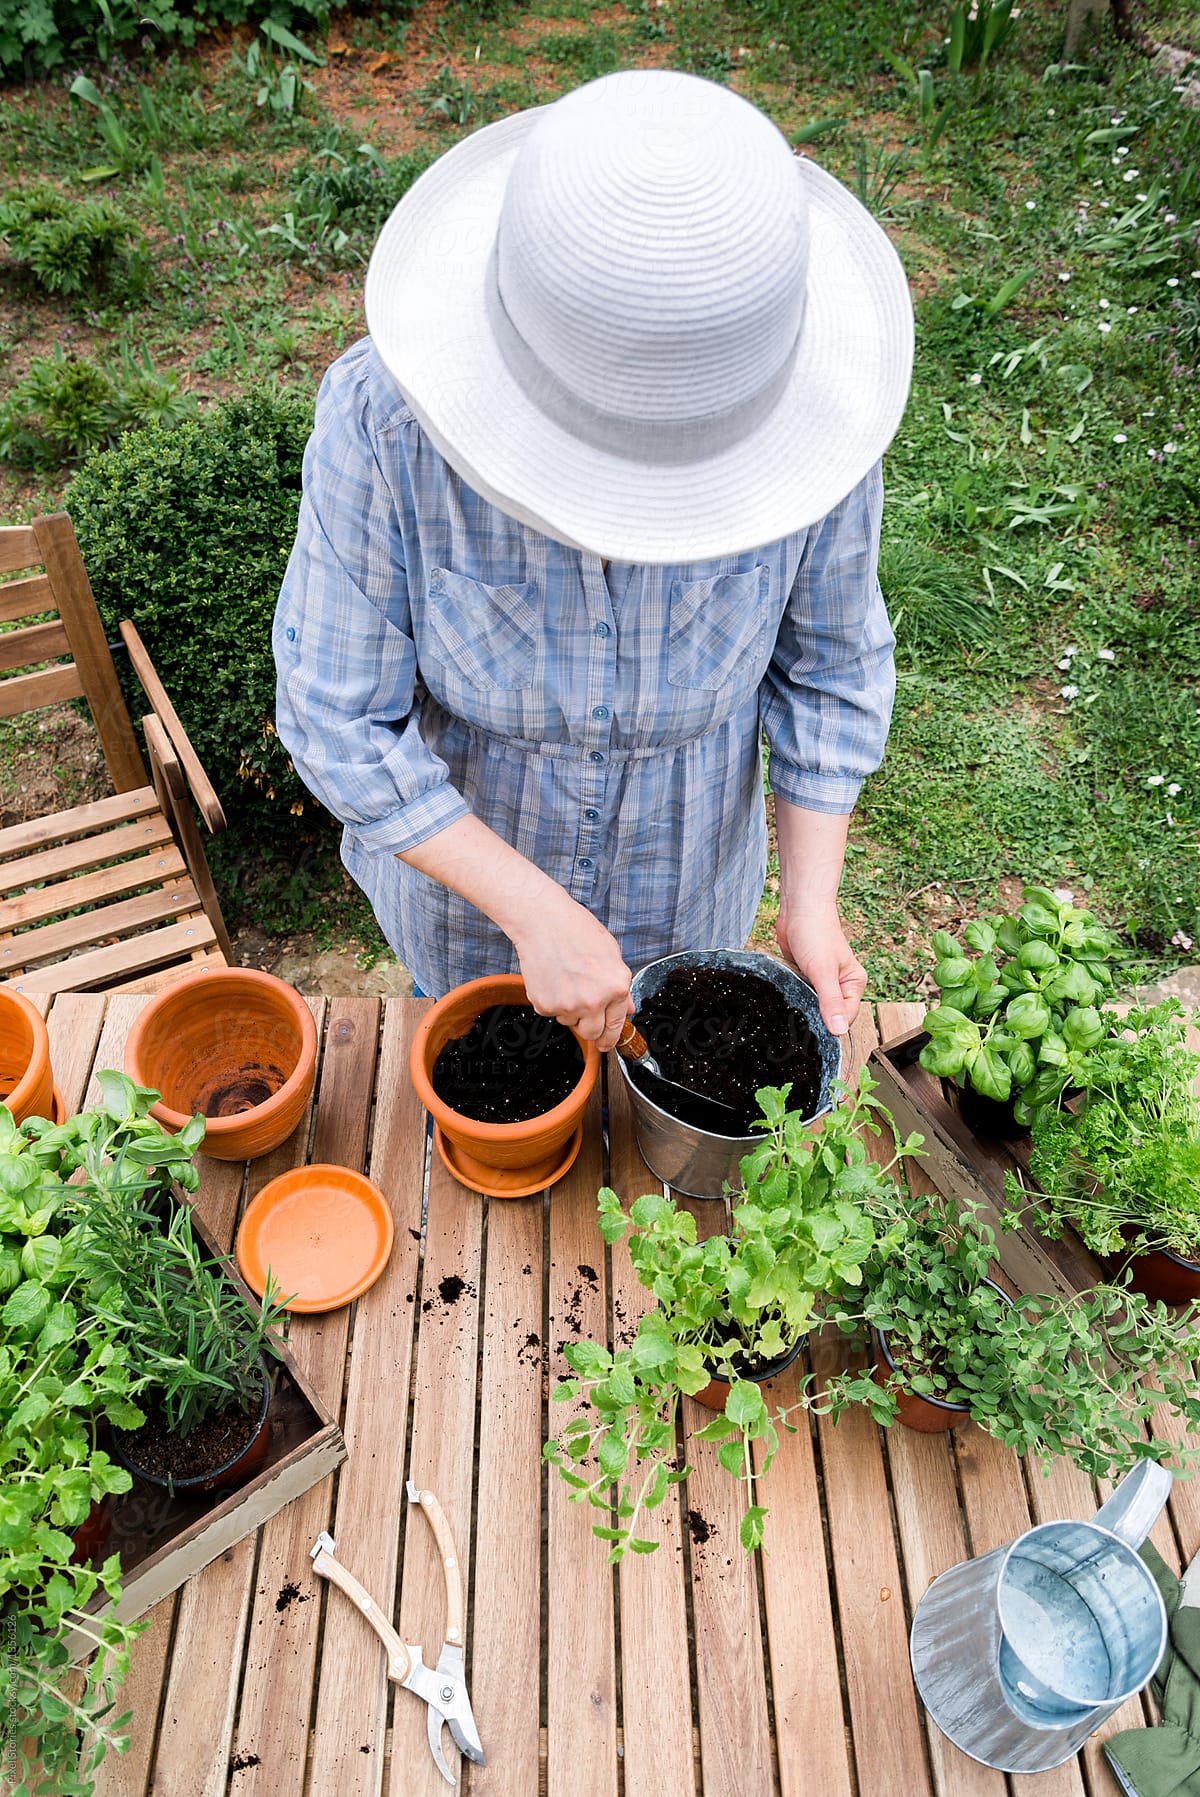 Woman transferring soil for replanting plant